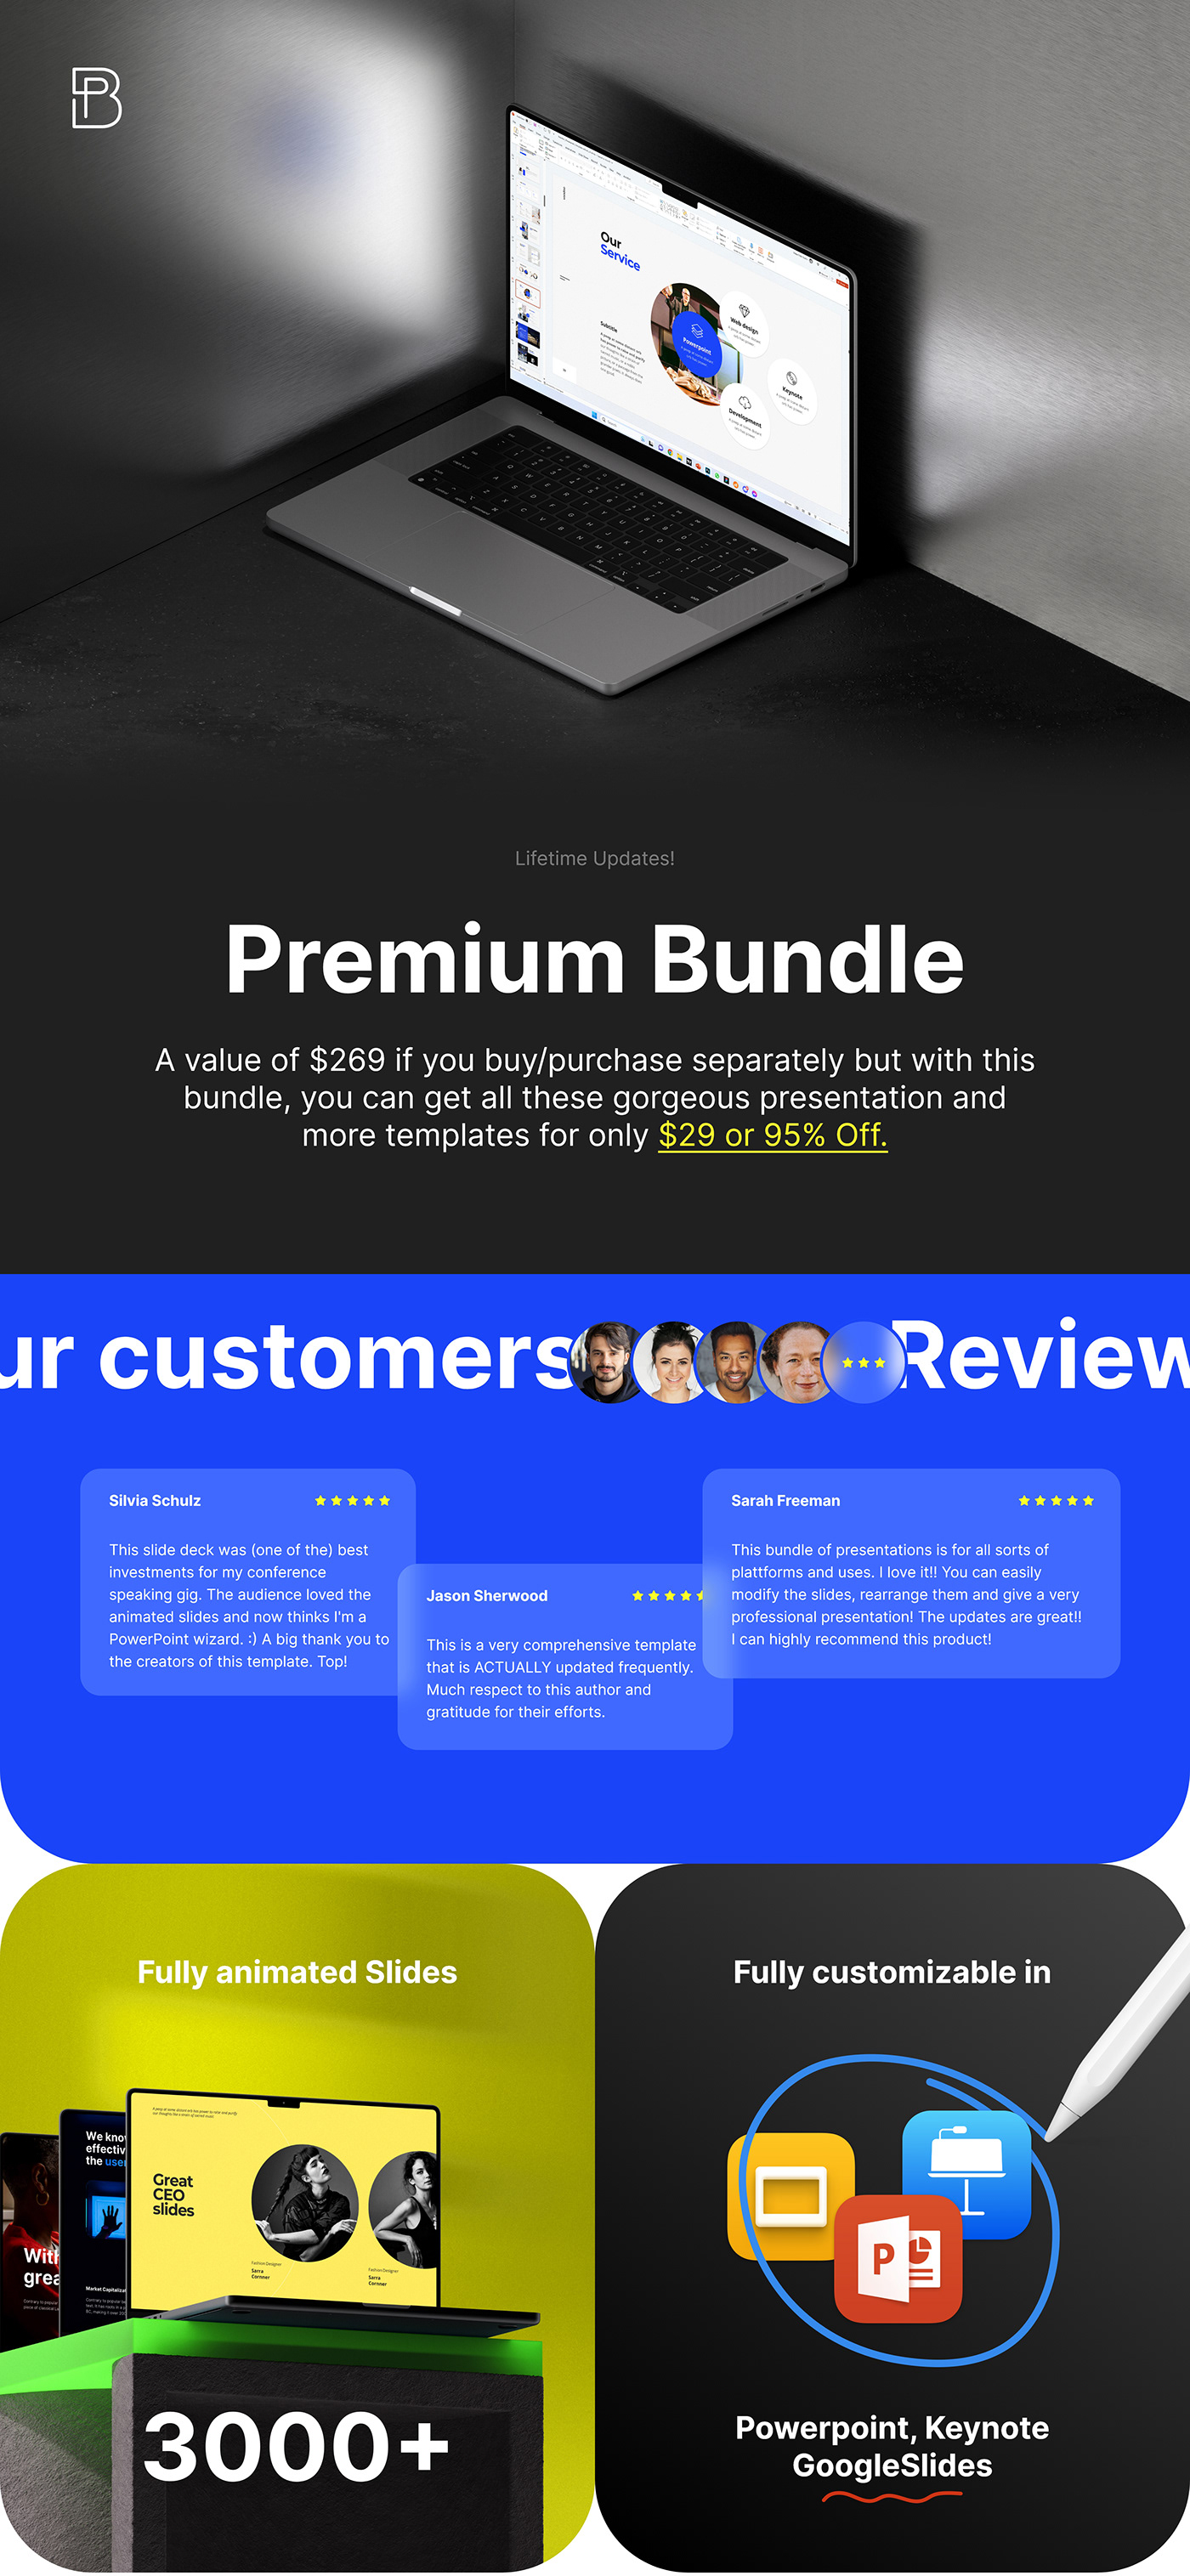 Powerpoint Keynote Google Slides free free powerpoint free keynote bundle Free Template free bundle free pitch deck